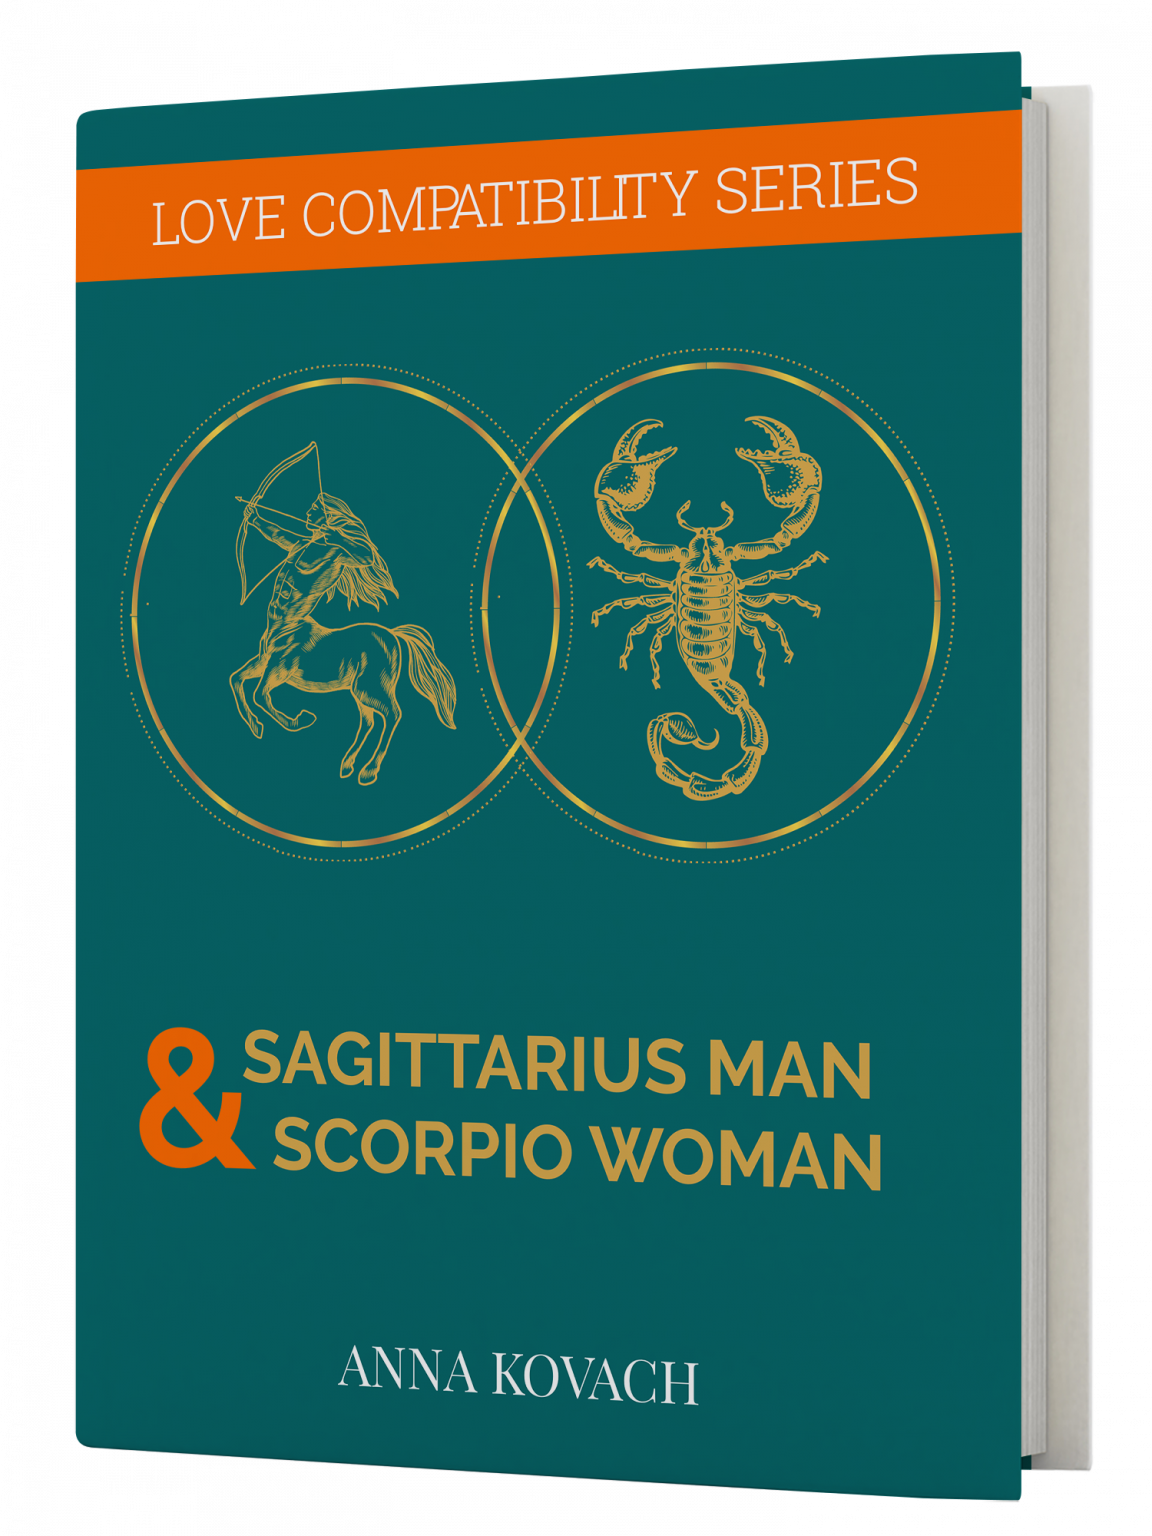 How scorpio woman show love